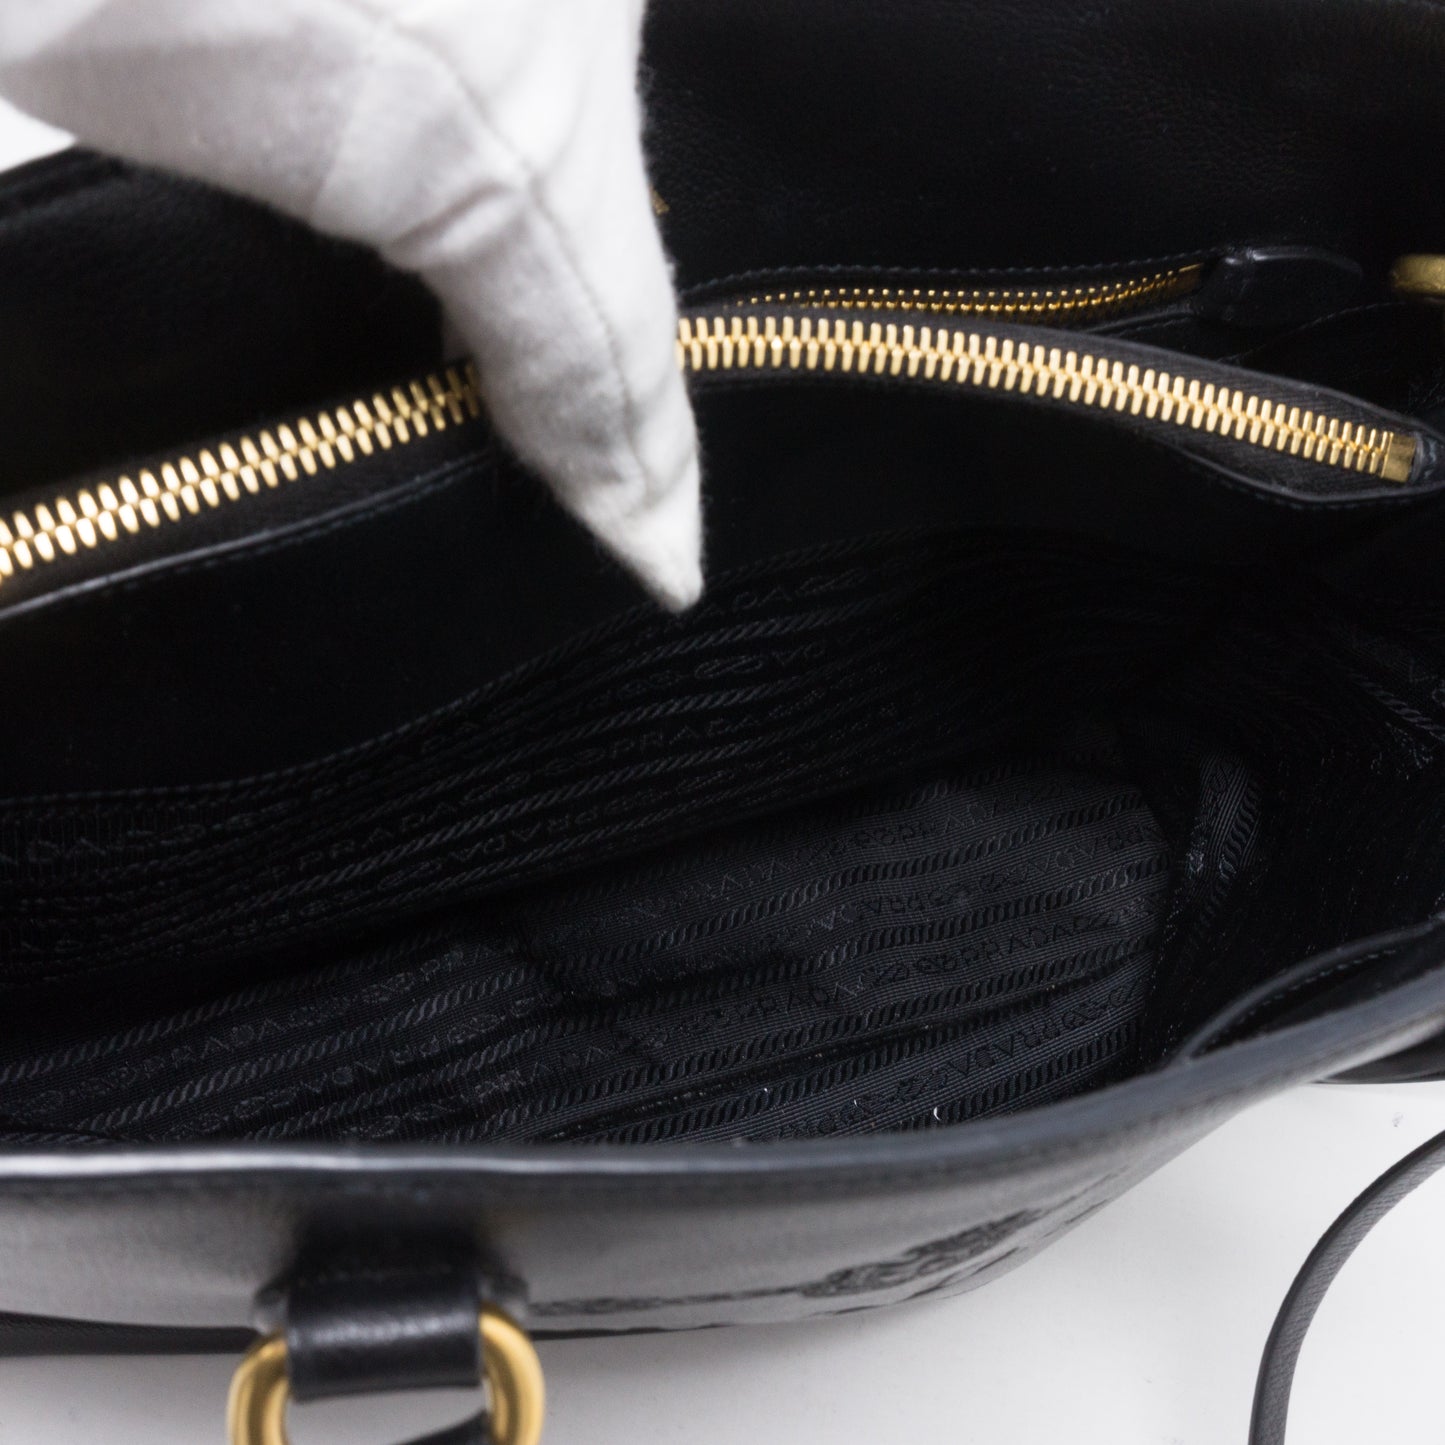 Two-way Handbag Black Leather